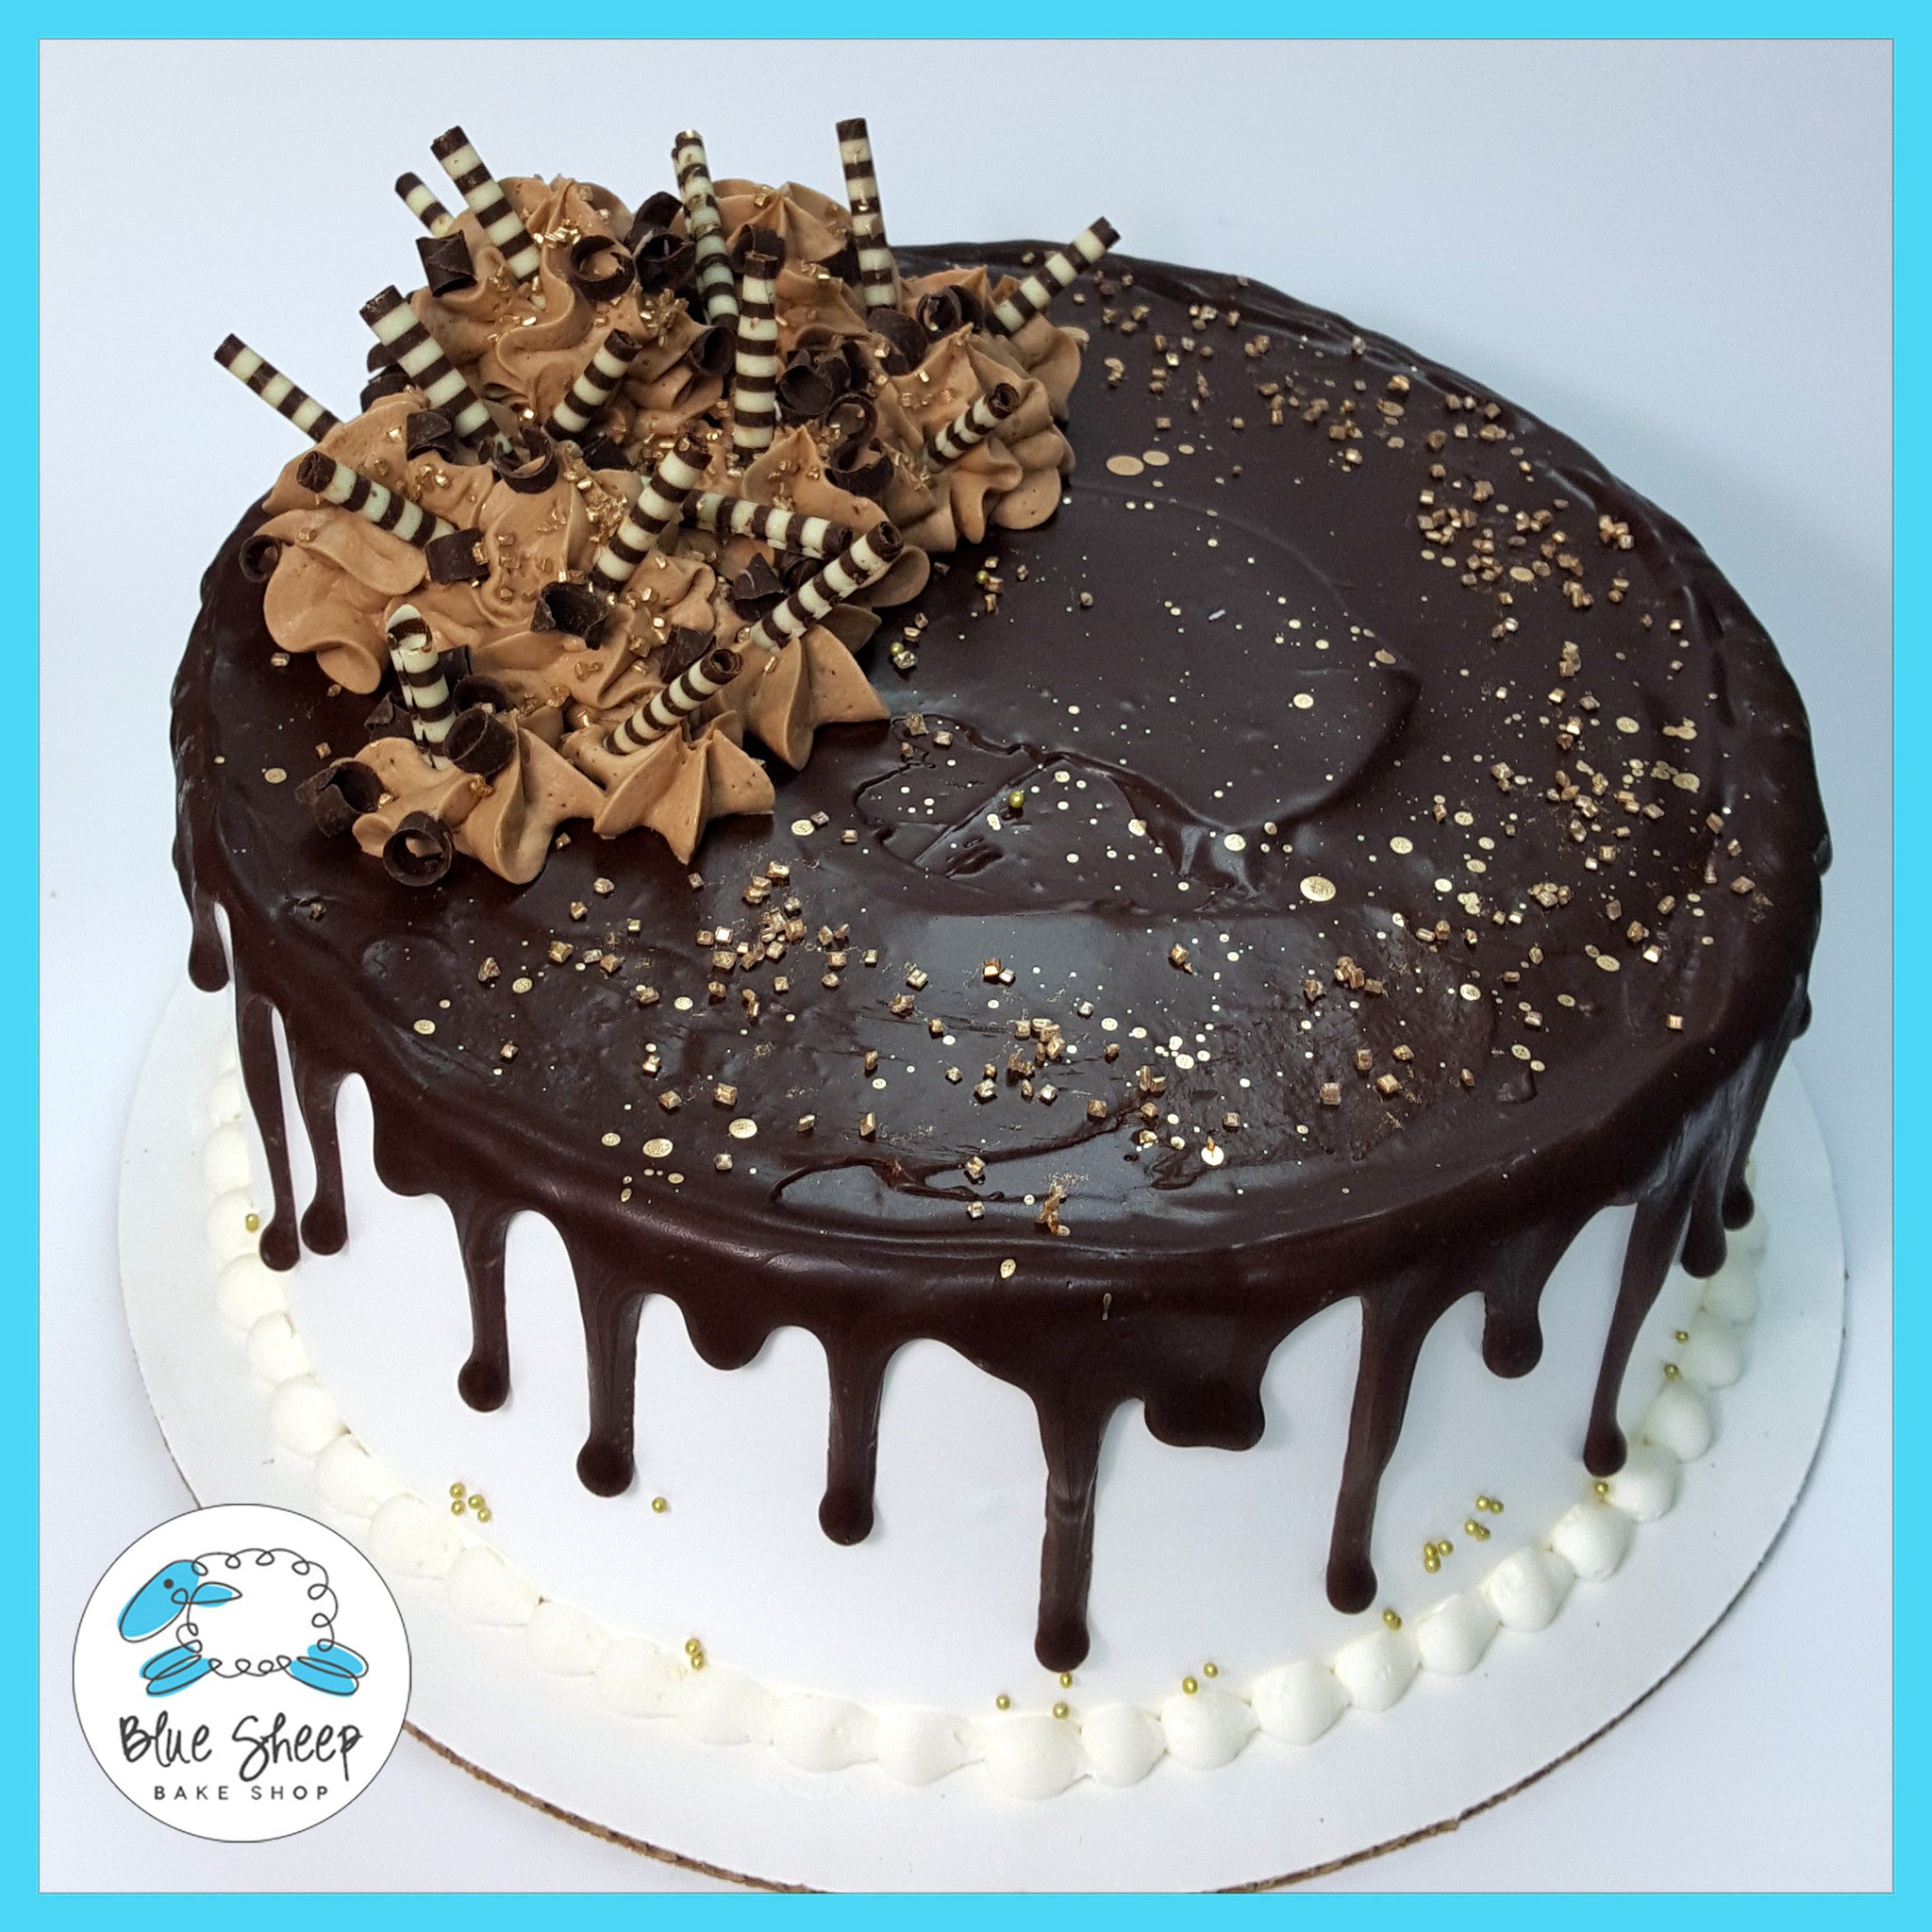 Chocolate Drip Cake Recipe: How to Make a Drip Cake | Unpeeled Journal